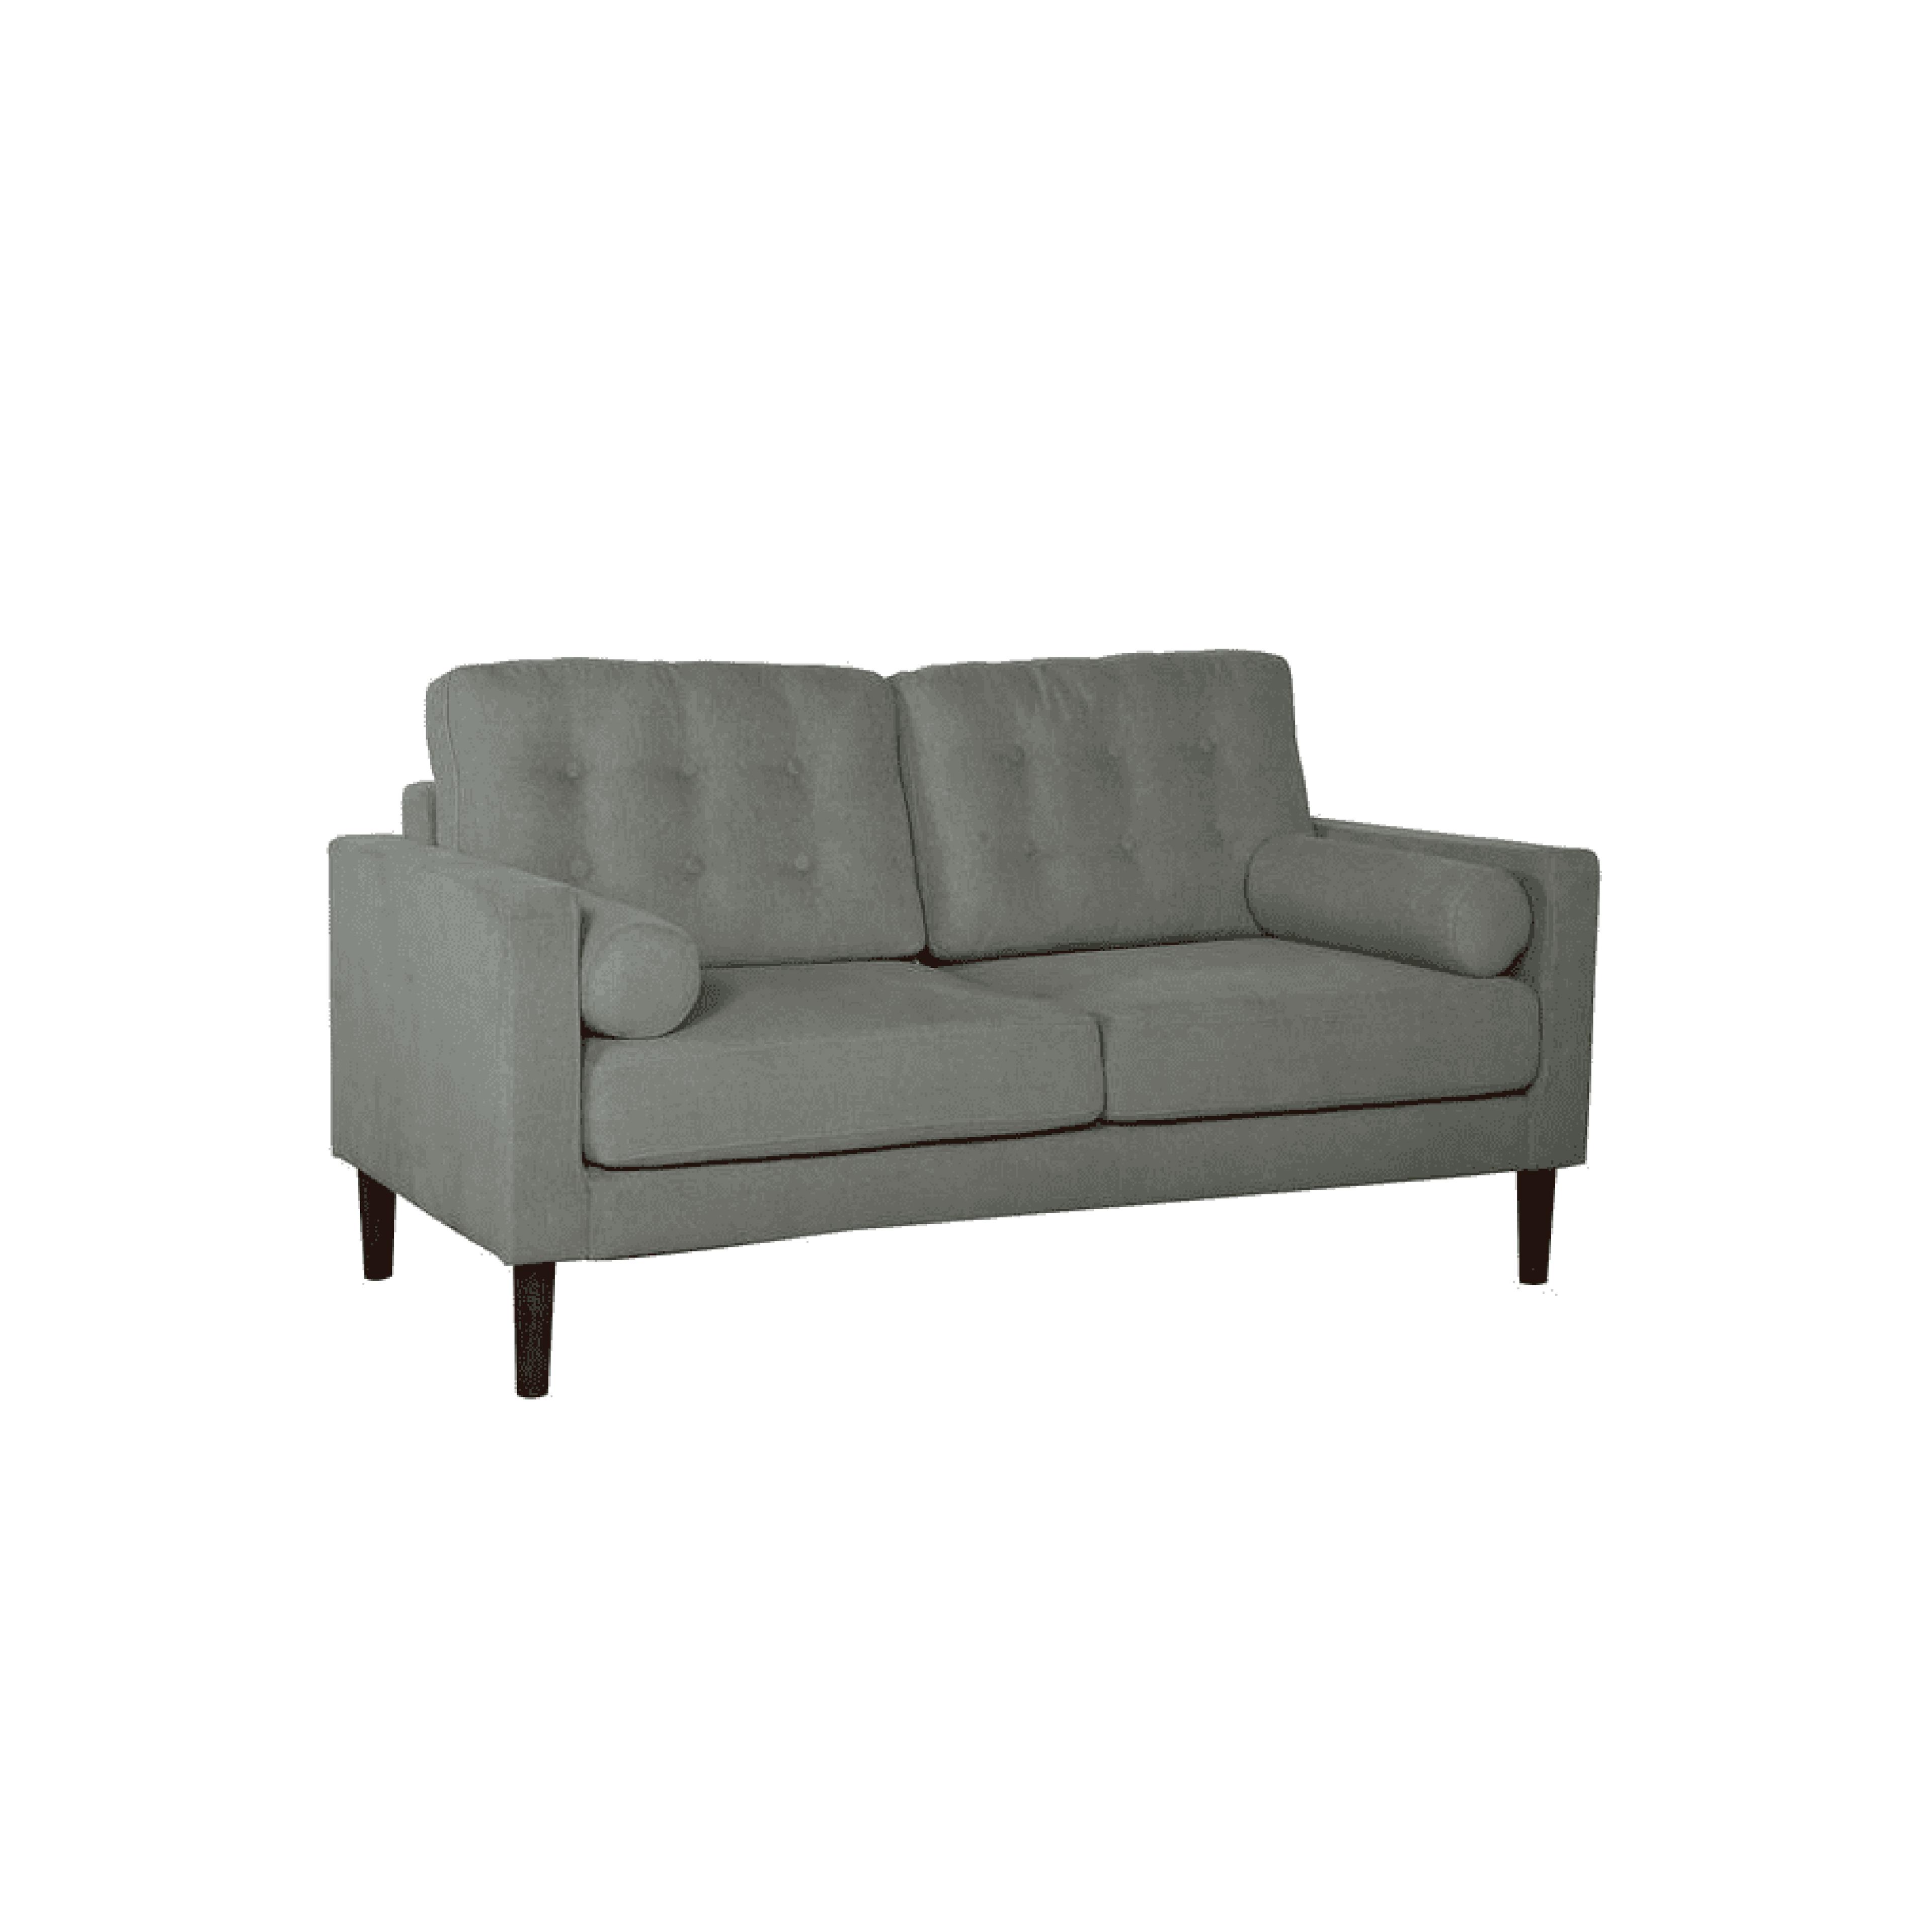 Forli Two Seater Sofa in Ash Grey Colour